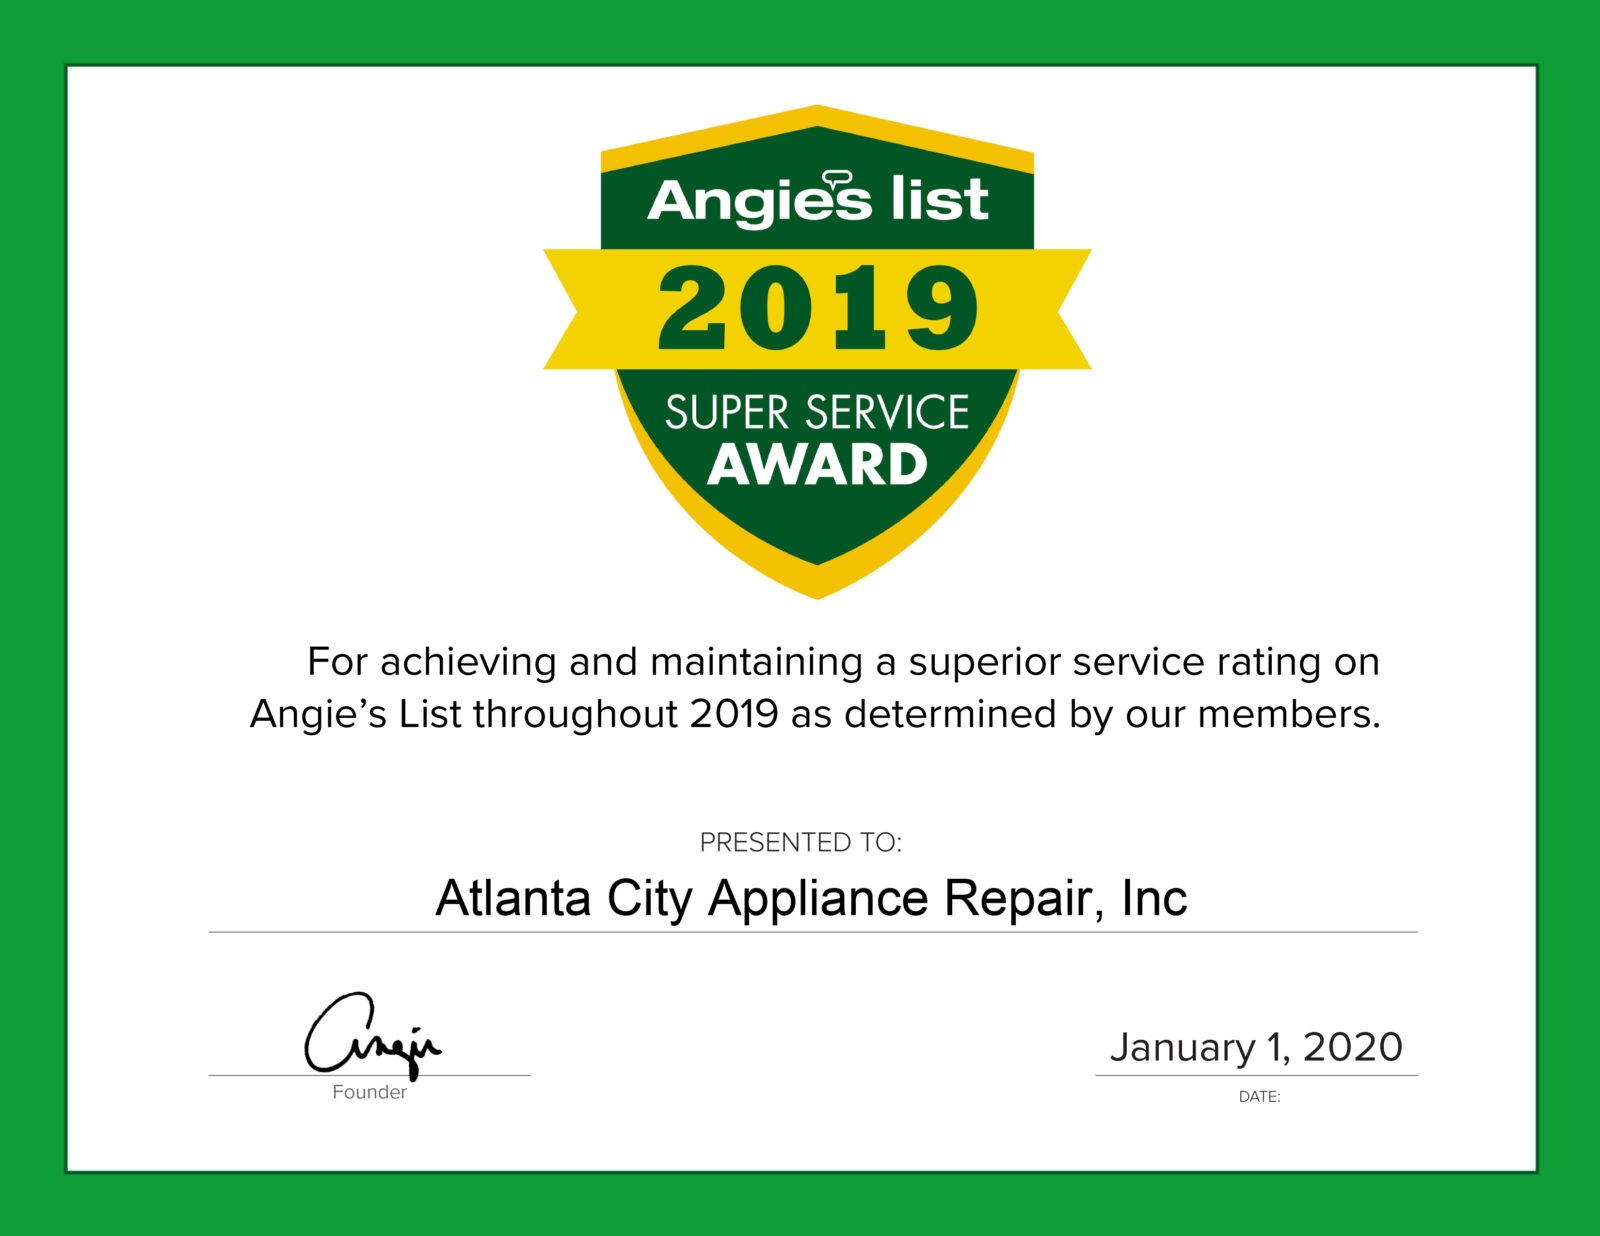 Appliance Repair Angies List Winner 2019 Certificate